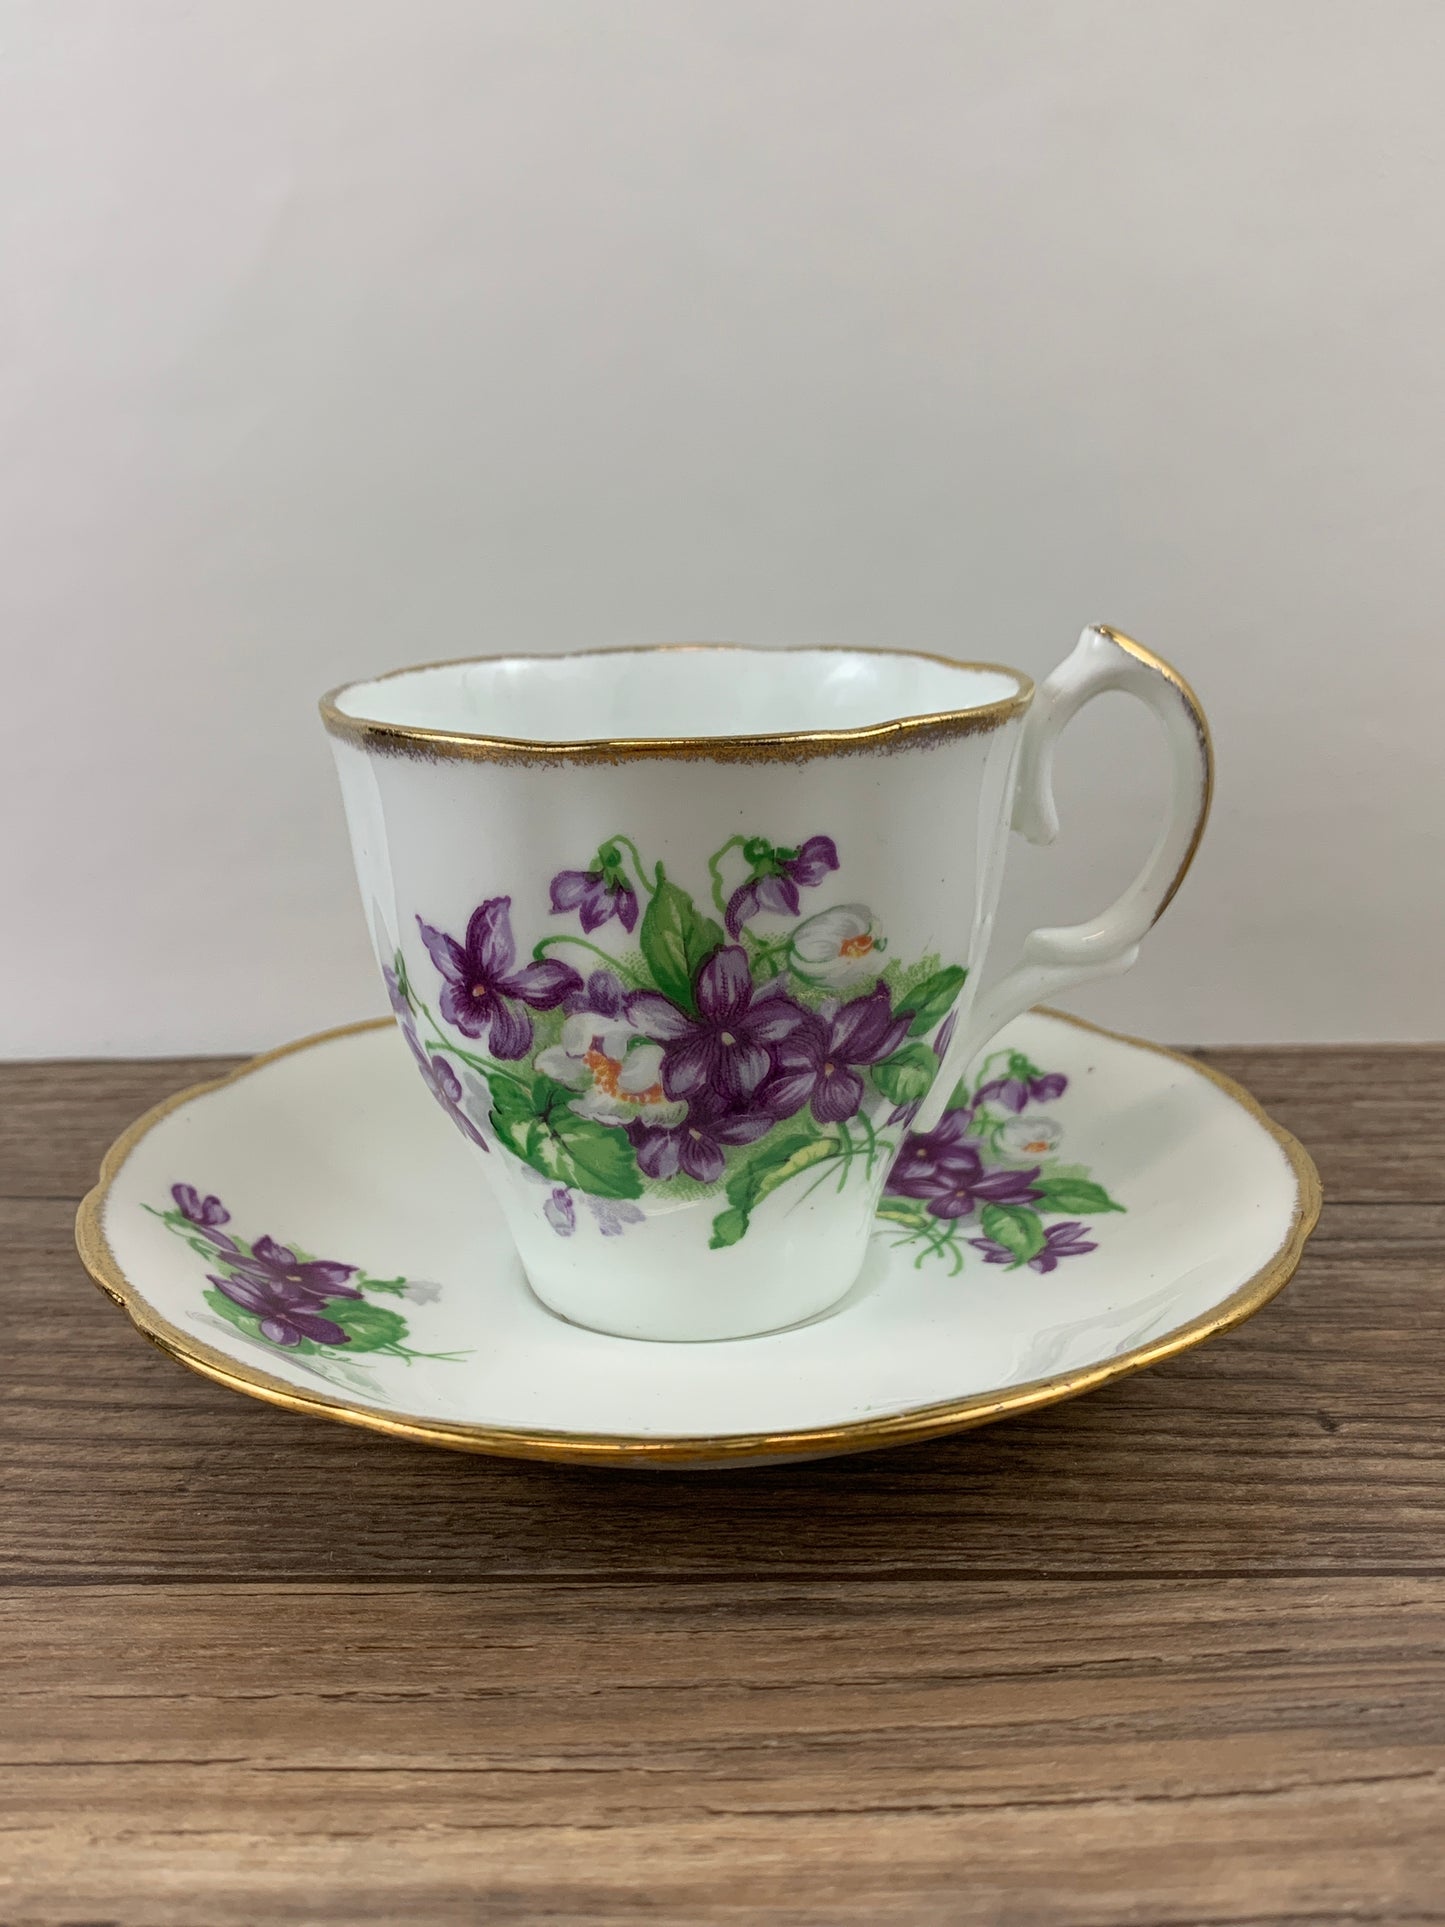 Vintage English Teacup with Purple Violets